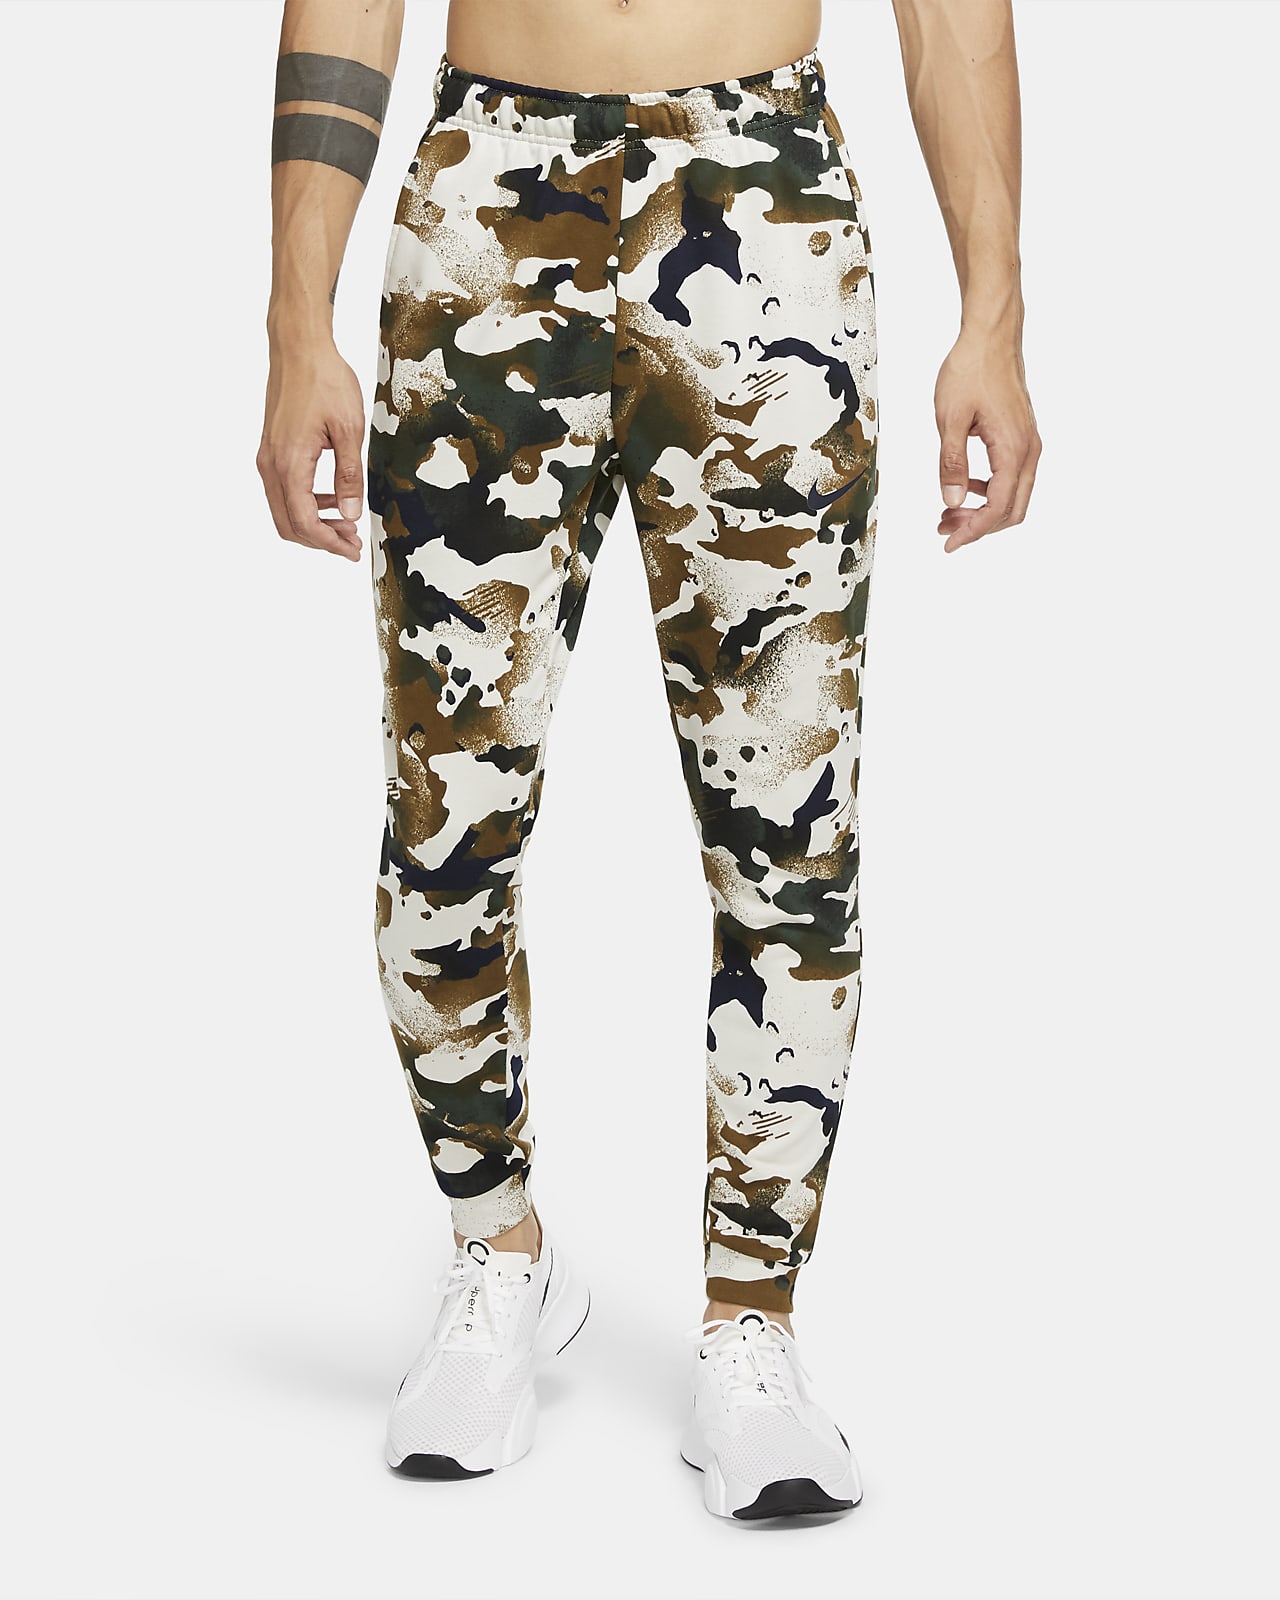 men's camouflage pants for sale